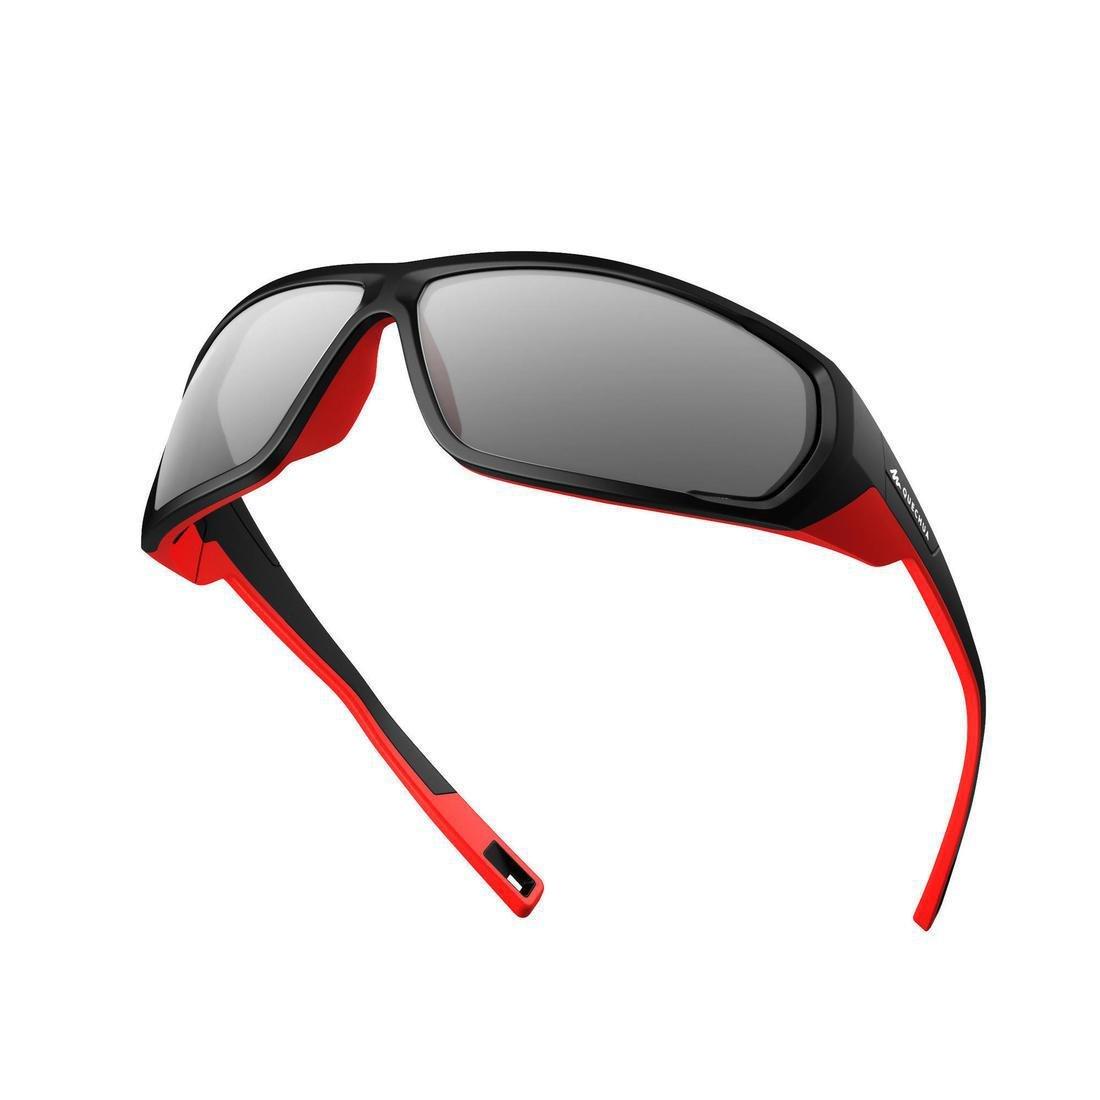 QUECHUA - Adult Hiking Sunglasses Category 4 Polarised MH570, Black